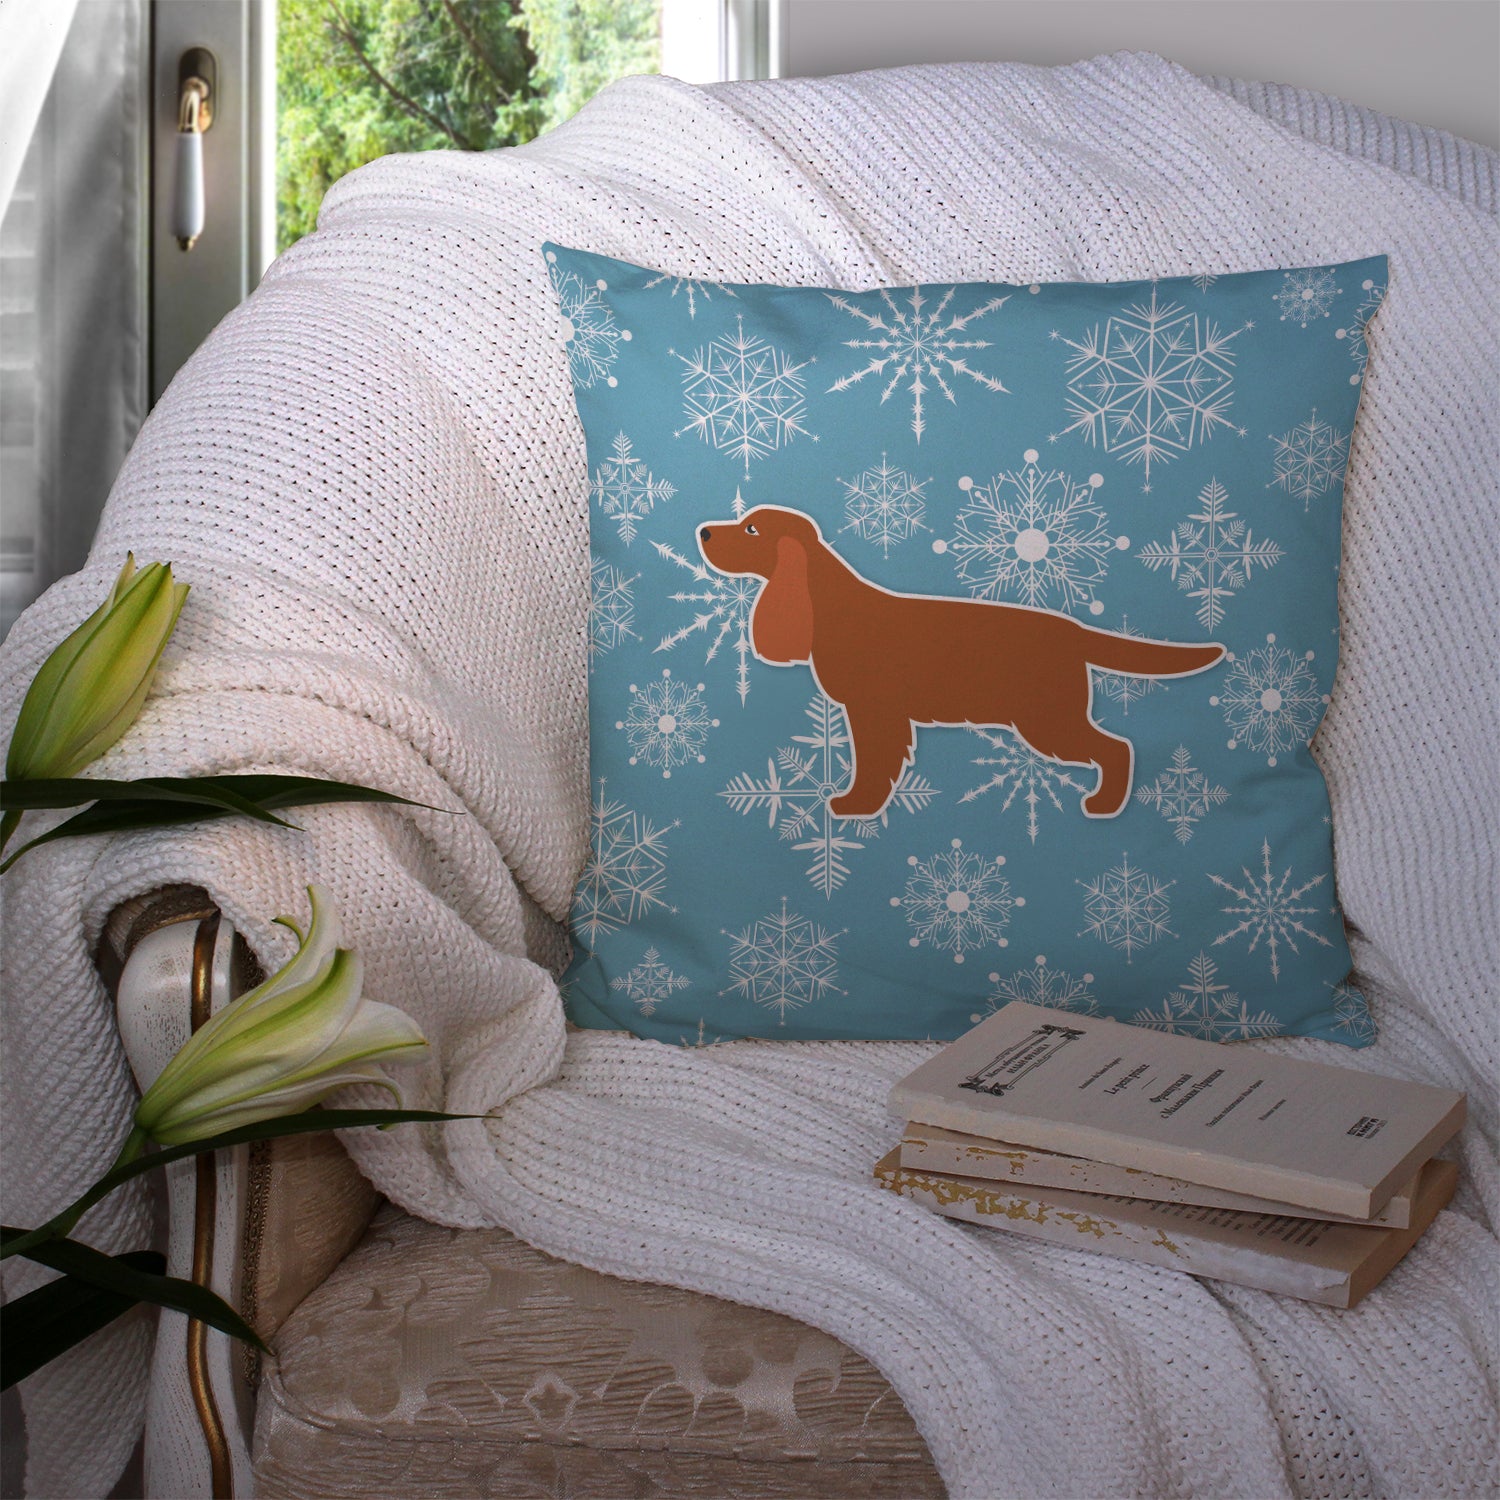 Winter Snowflake English Cocker Spaniel Fabric Decorative Pillow BB3512PW1414 - the-store.com